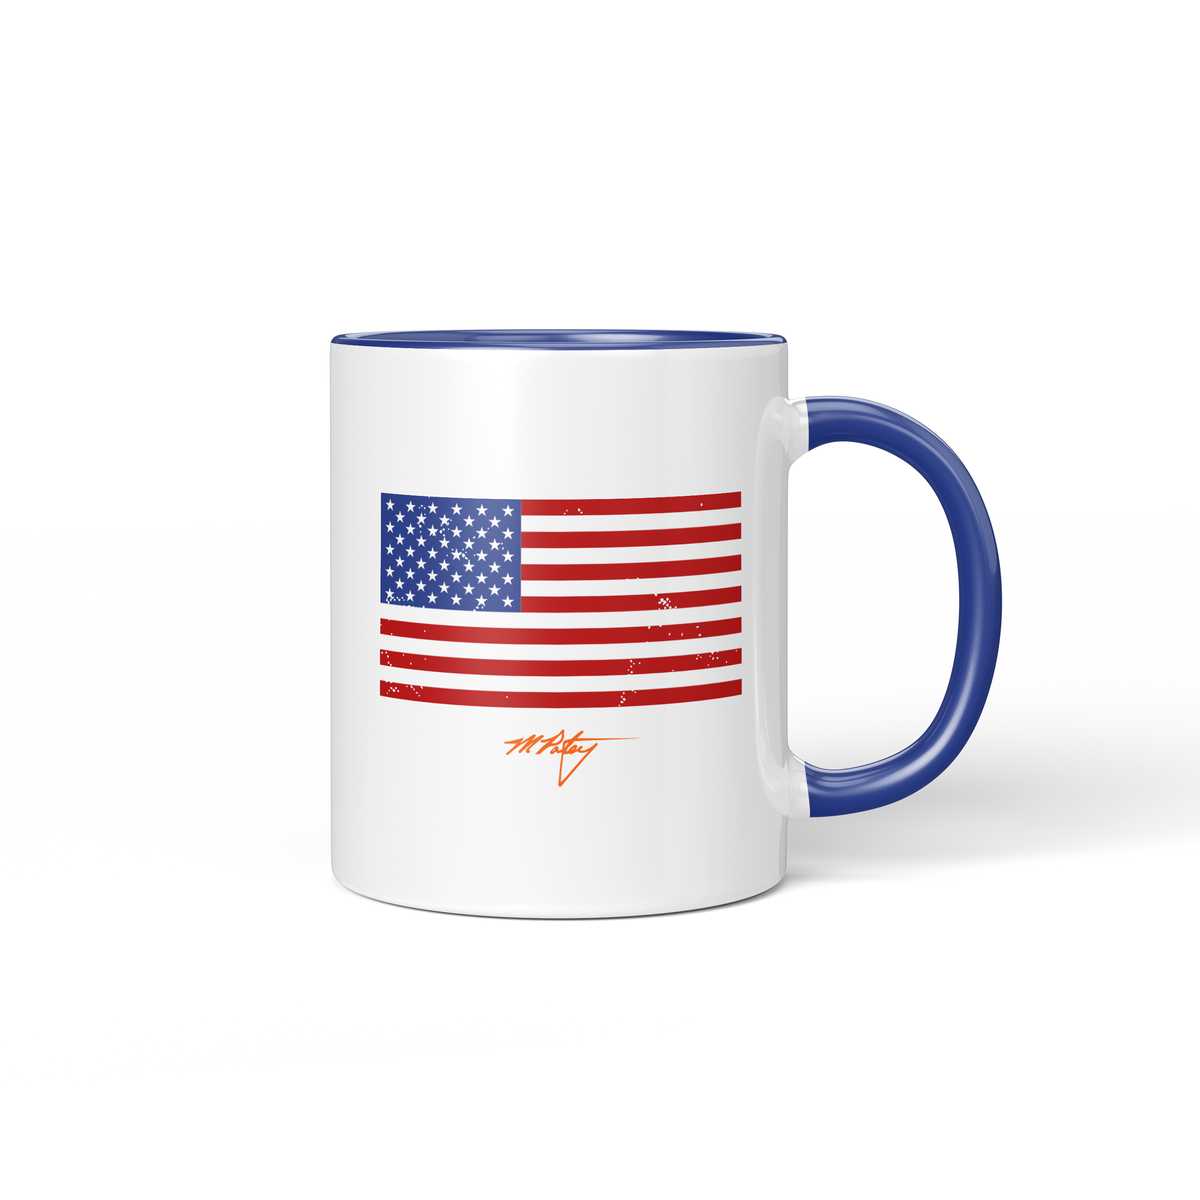 Mike Patey - American Flag Mug